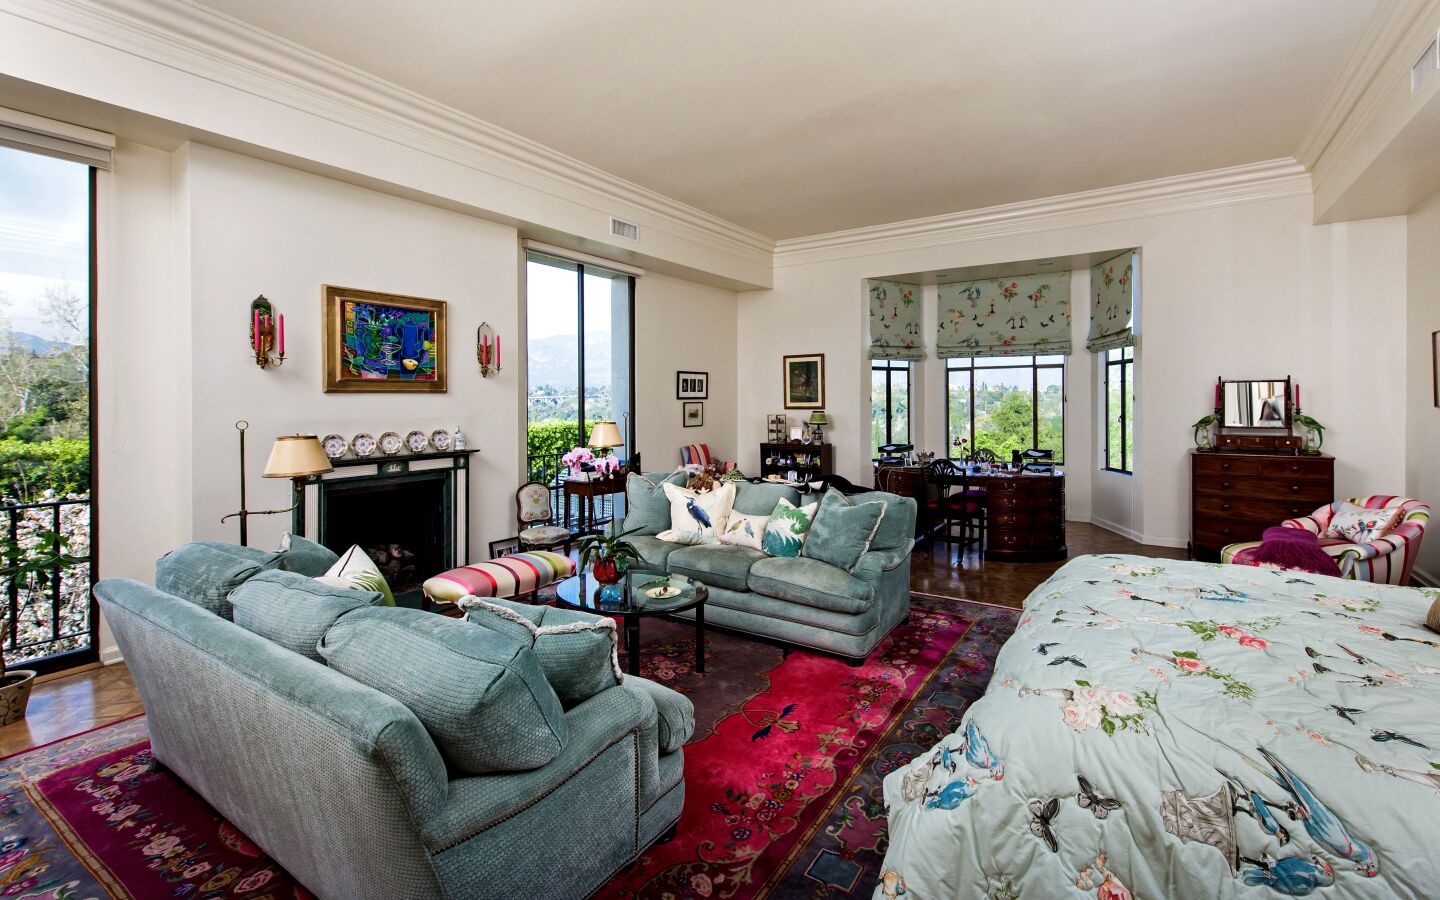 A bedroom inside the ornate home with windows providing views of Pasadena